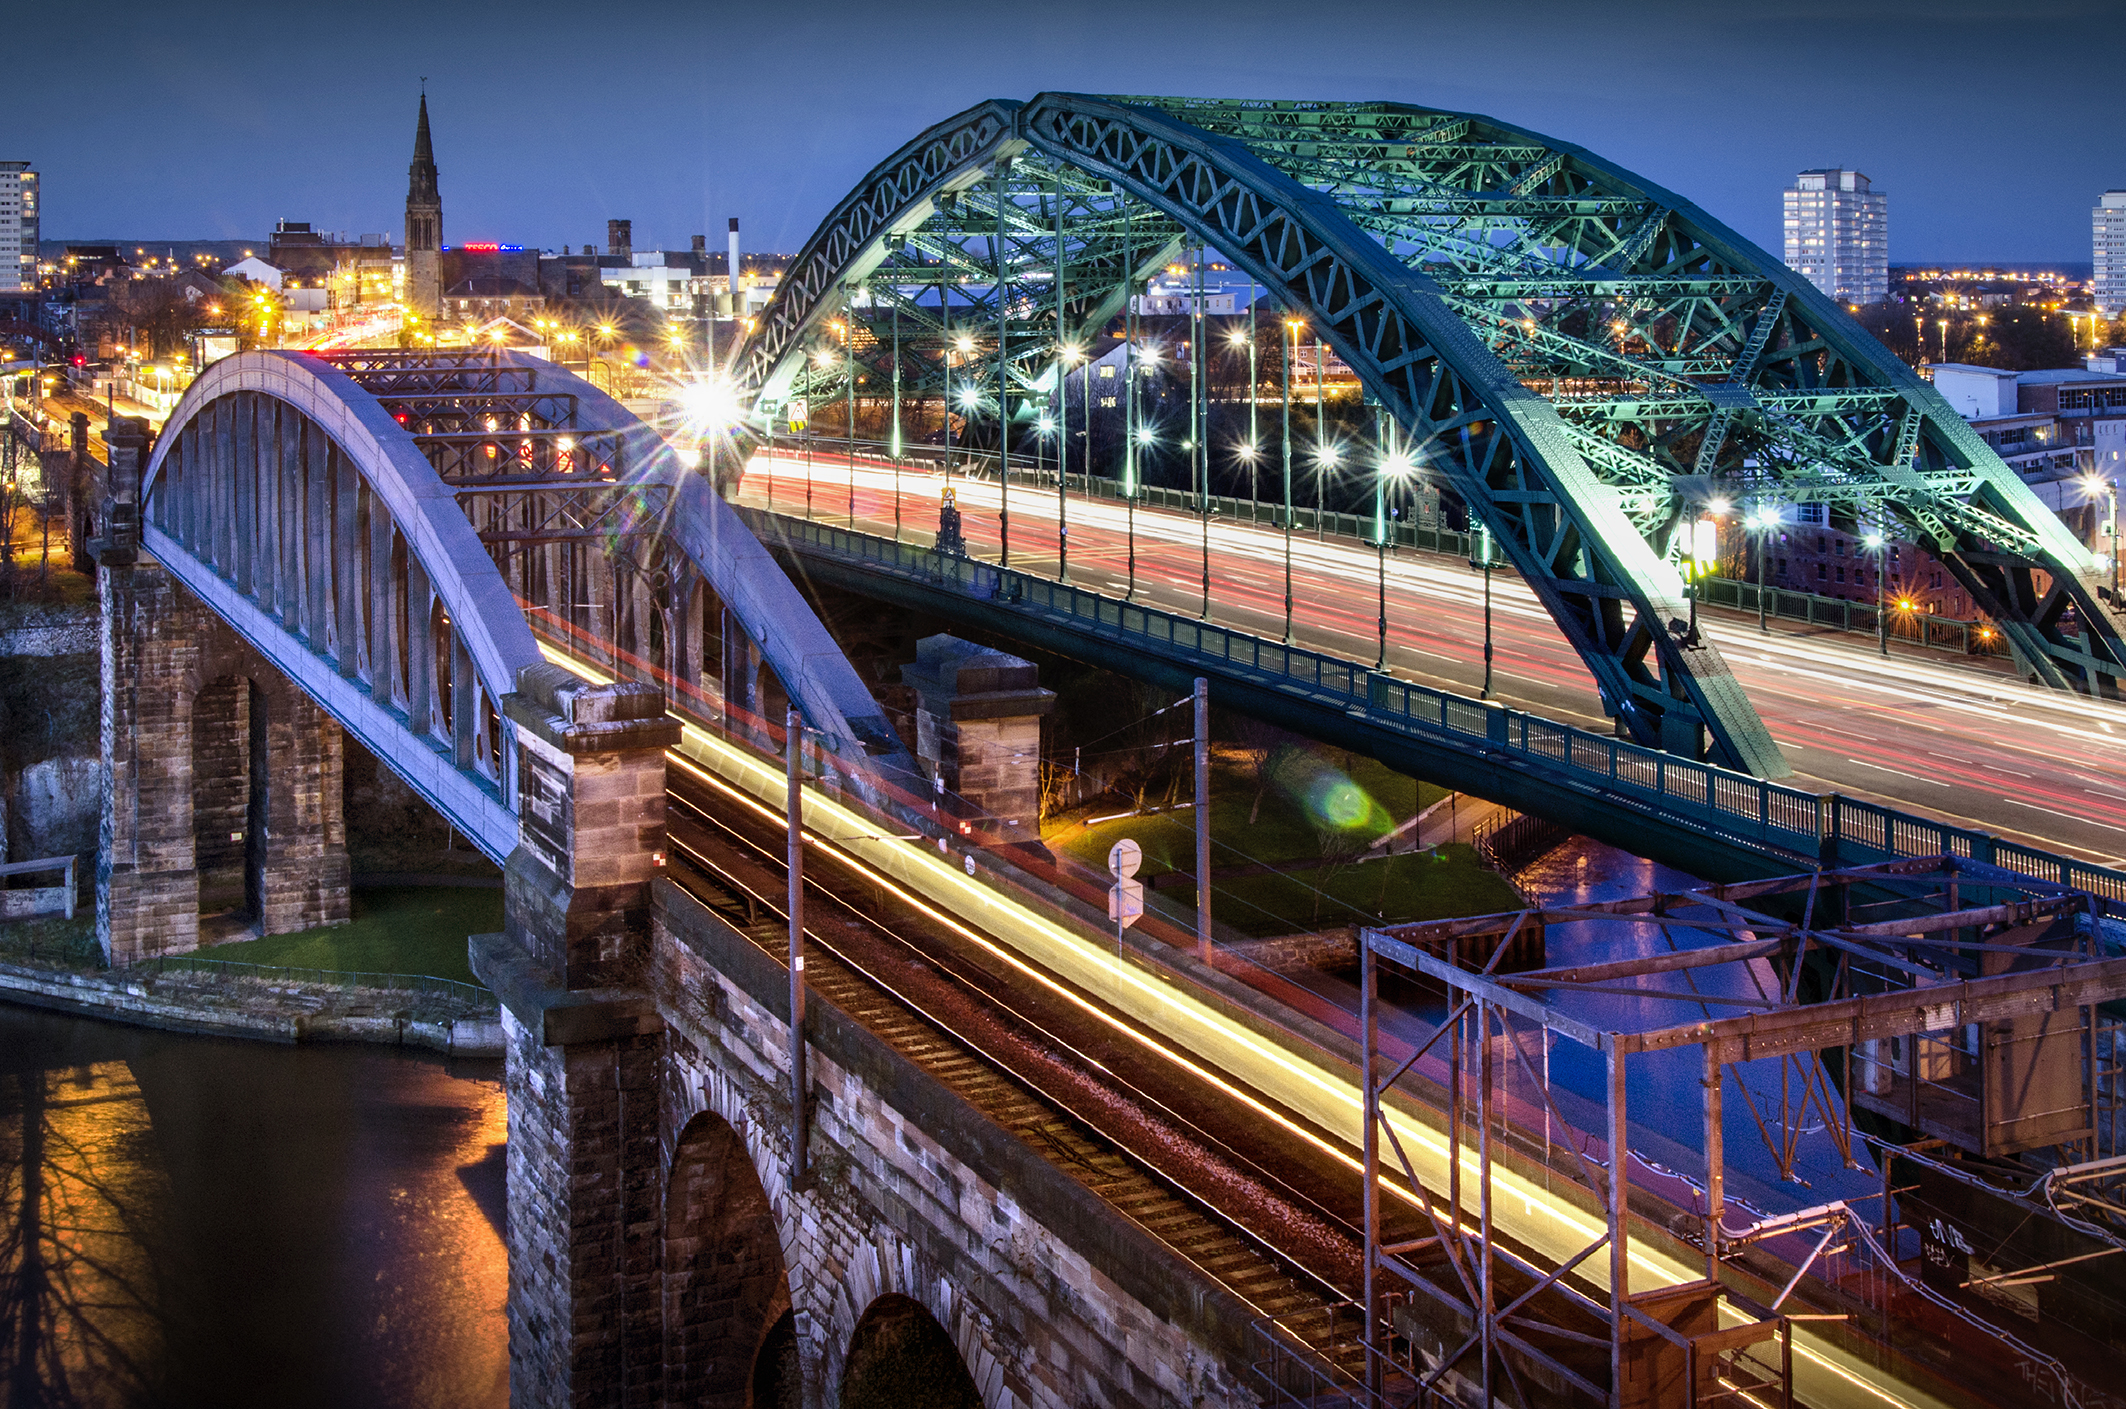 Bridges across the Wear in Sunderland, lit up in the evening